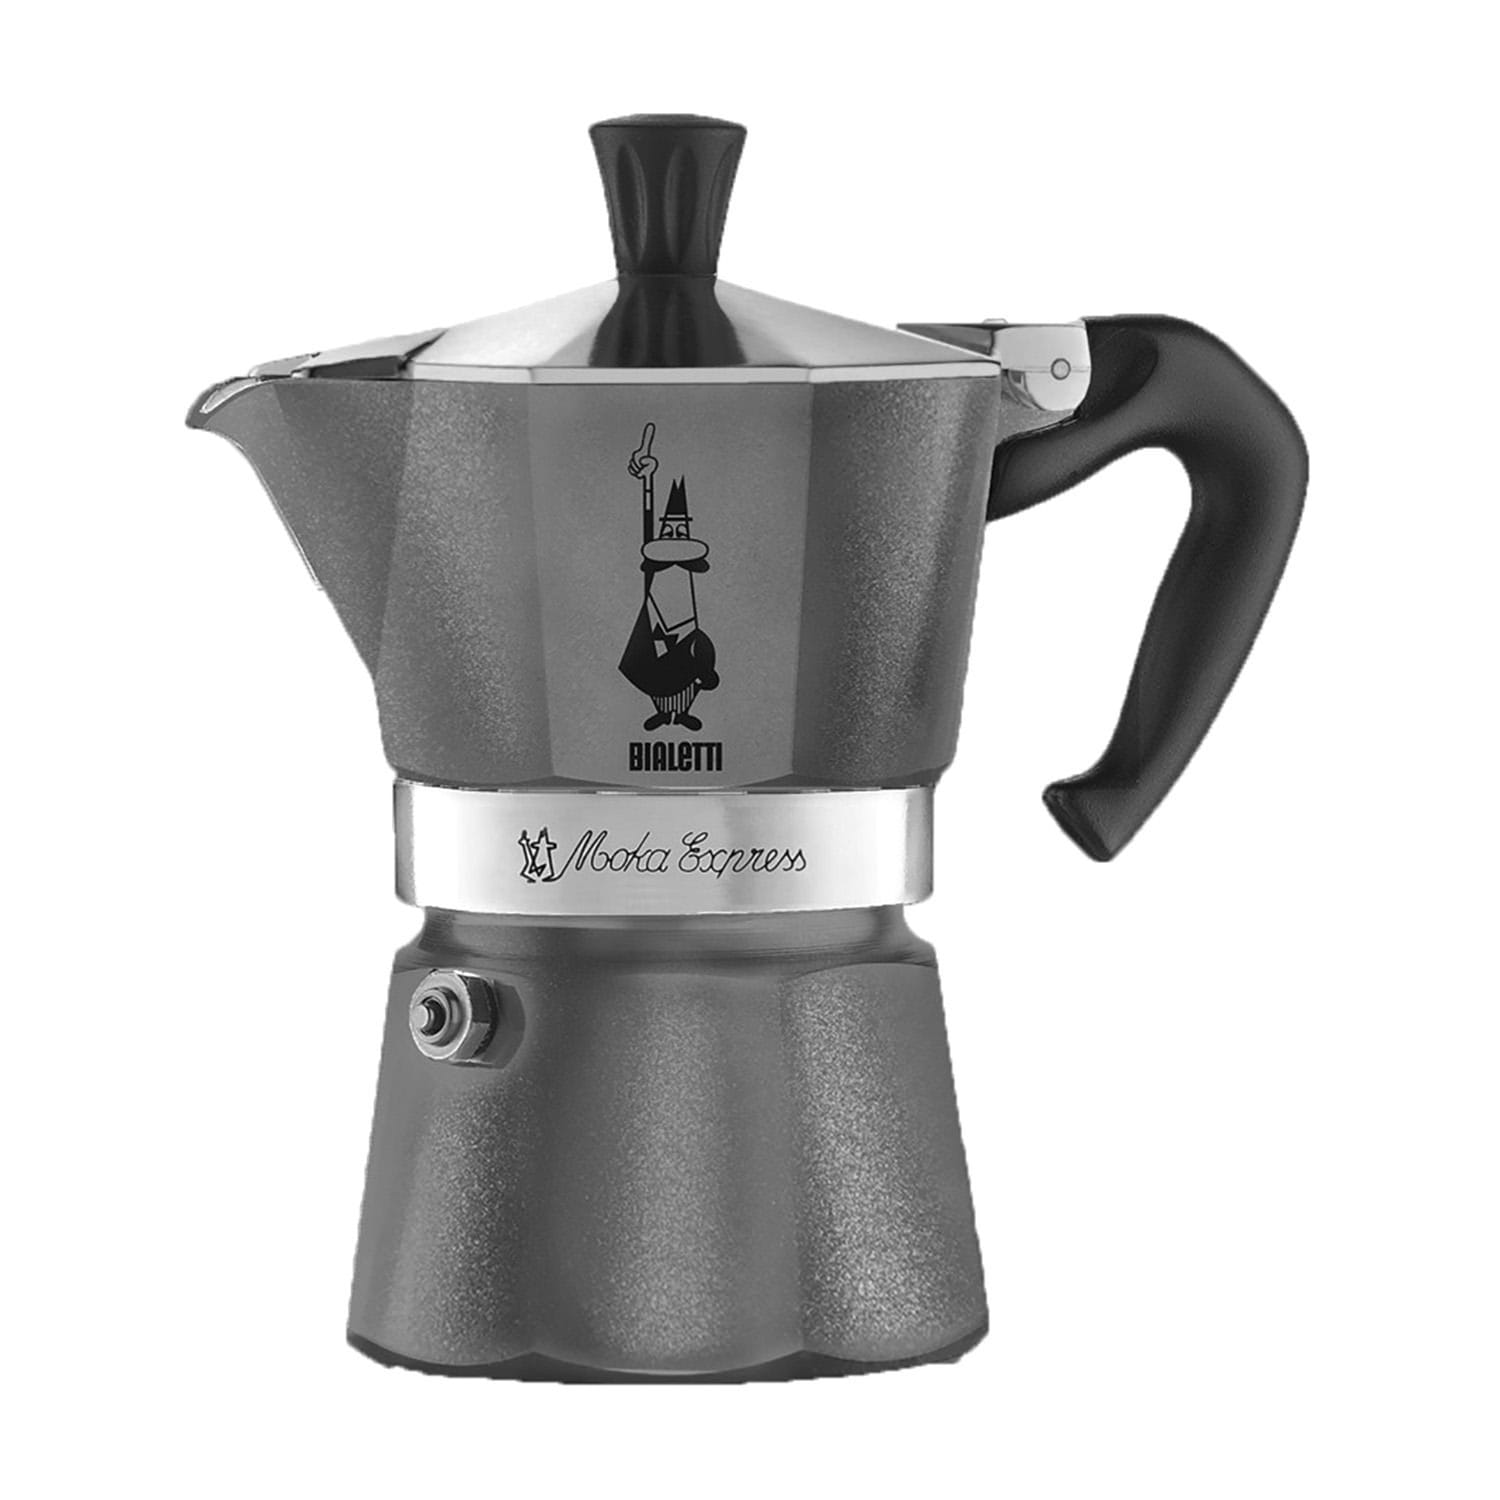 Bialetti Moka Express Diamond Coffee Maker - Grey - 5311 - Jashanmal Home